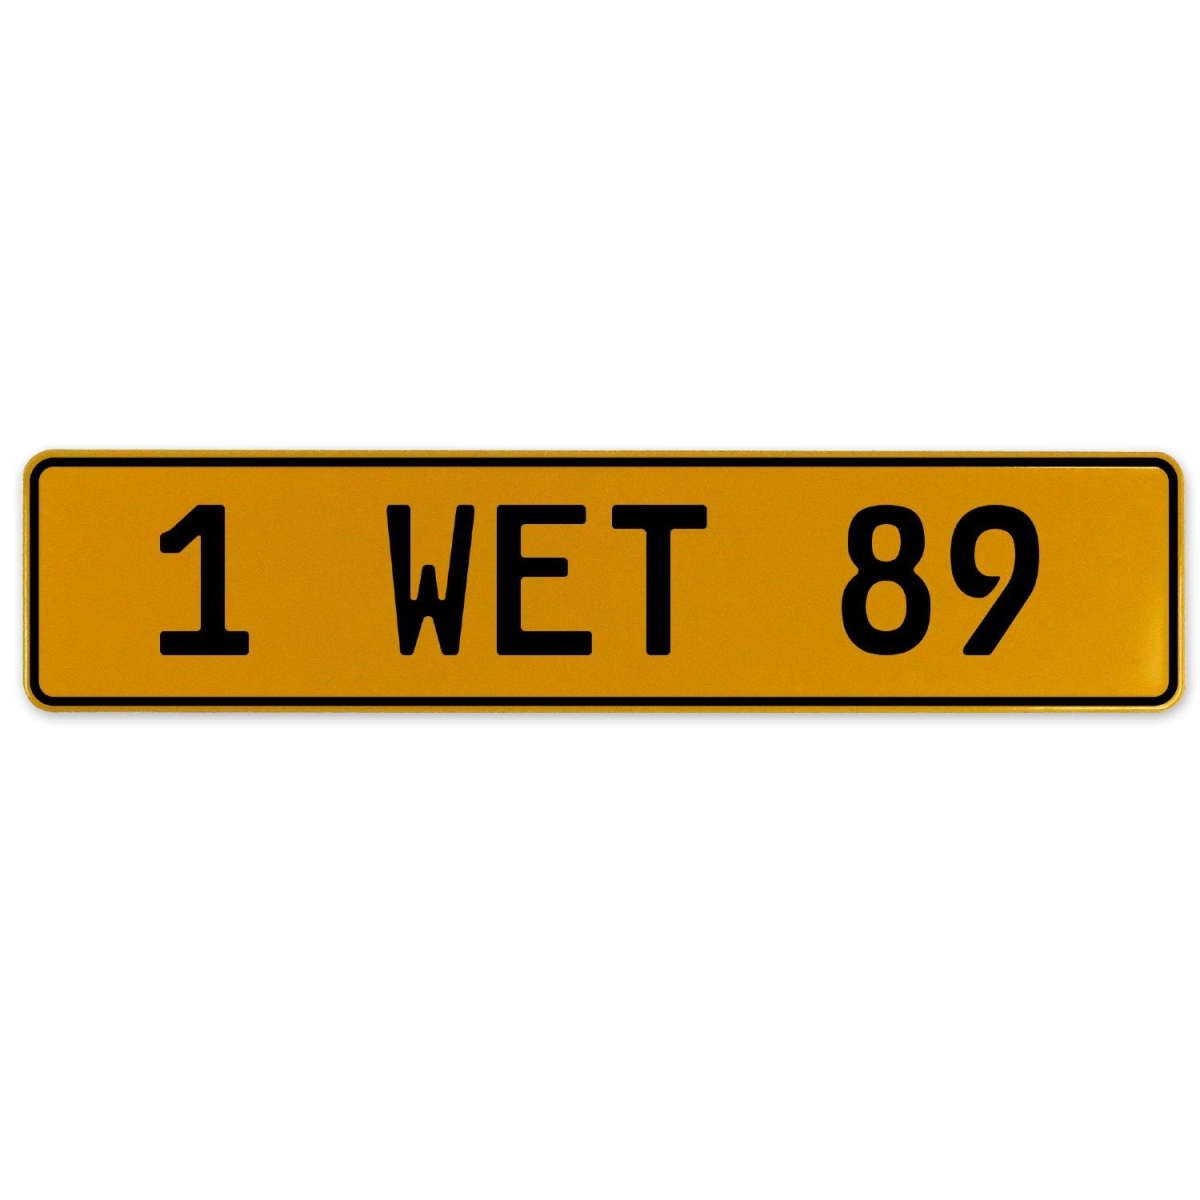 1 Wet 89 - Yellow Aluminum Street Sign Mancave Euro Plate Name Door Sign Wall